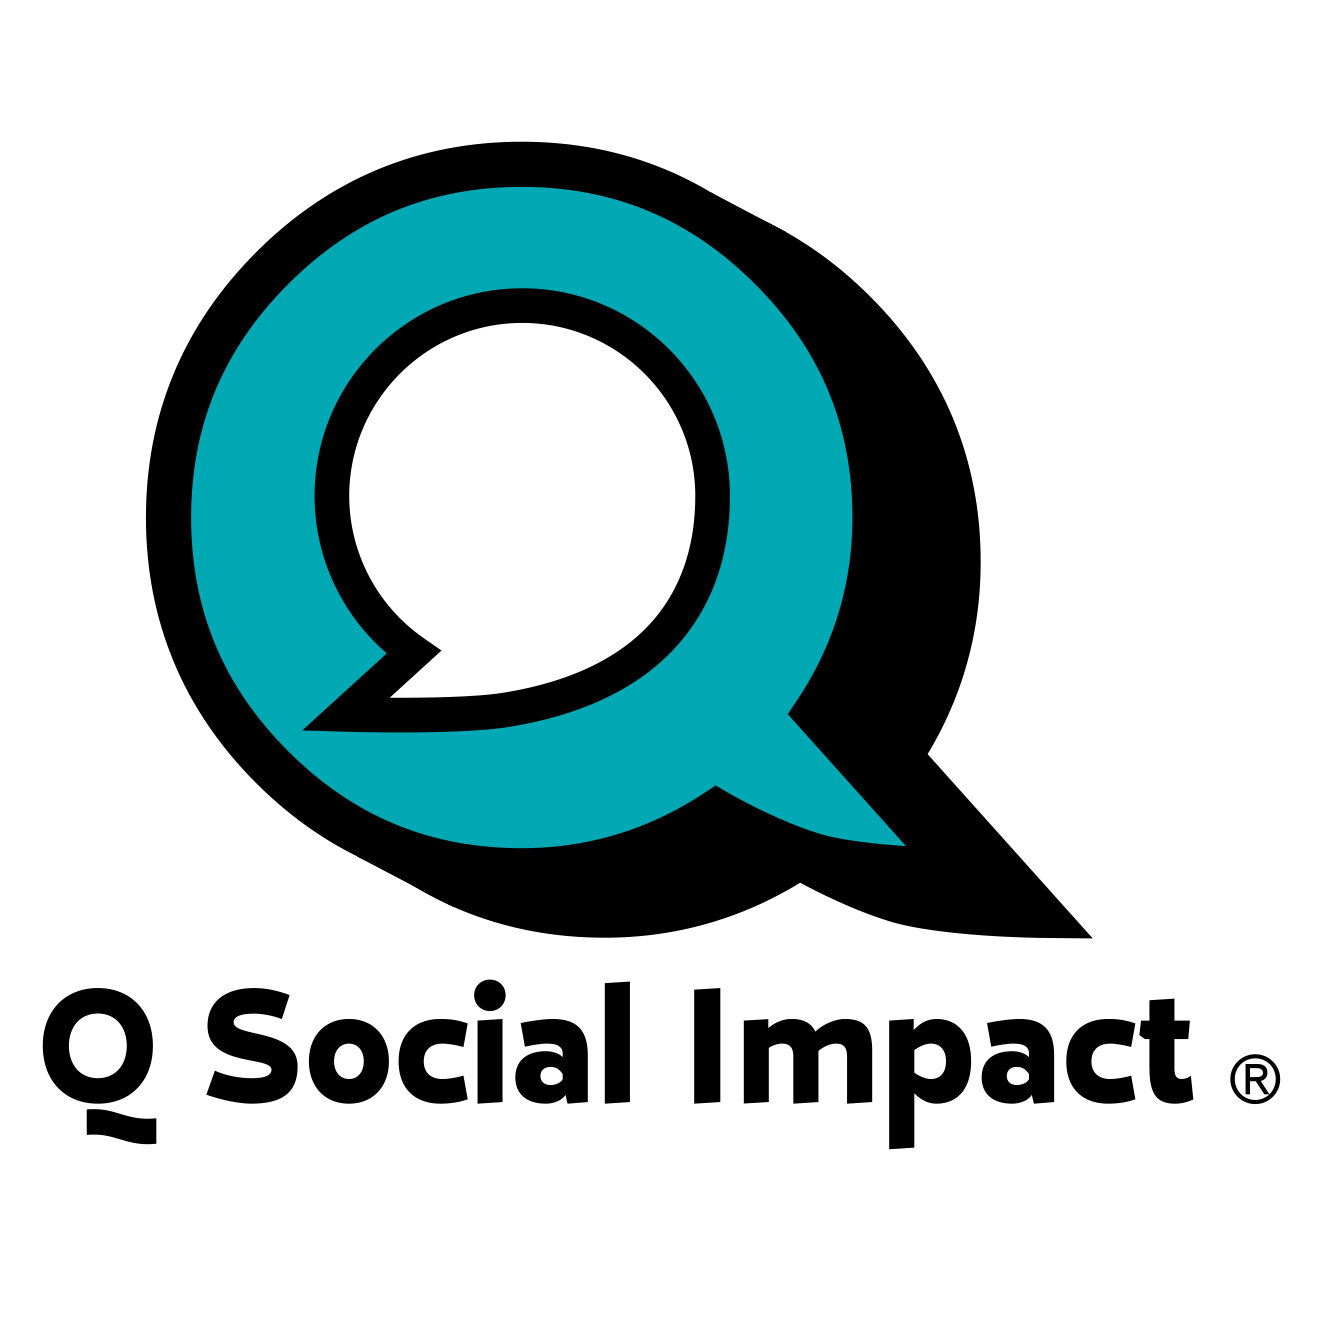 Q Social Impact | Sustainability and Social Impact Advisory